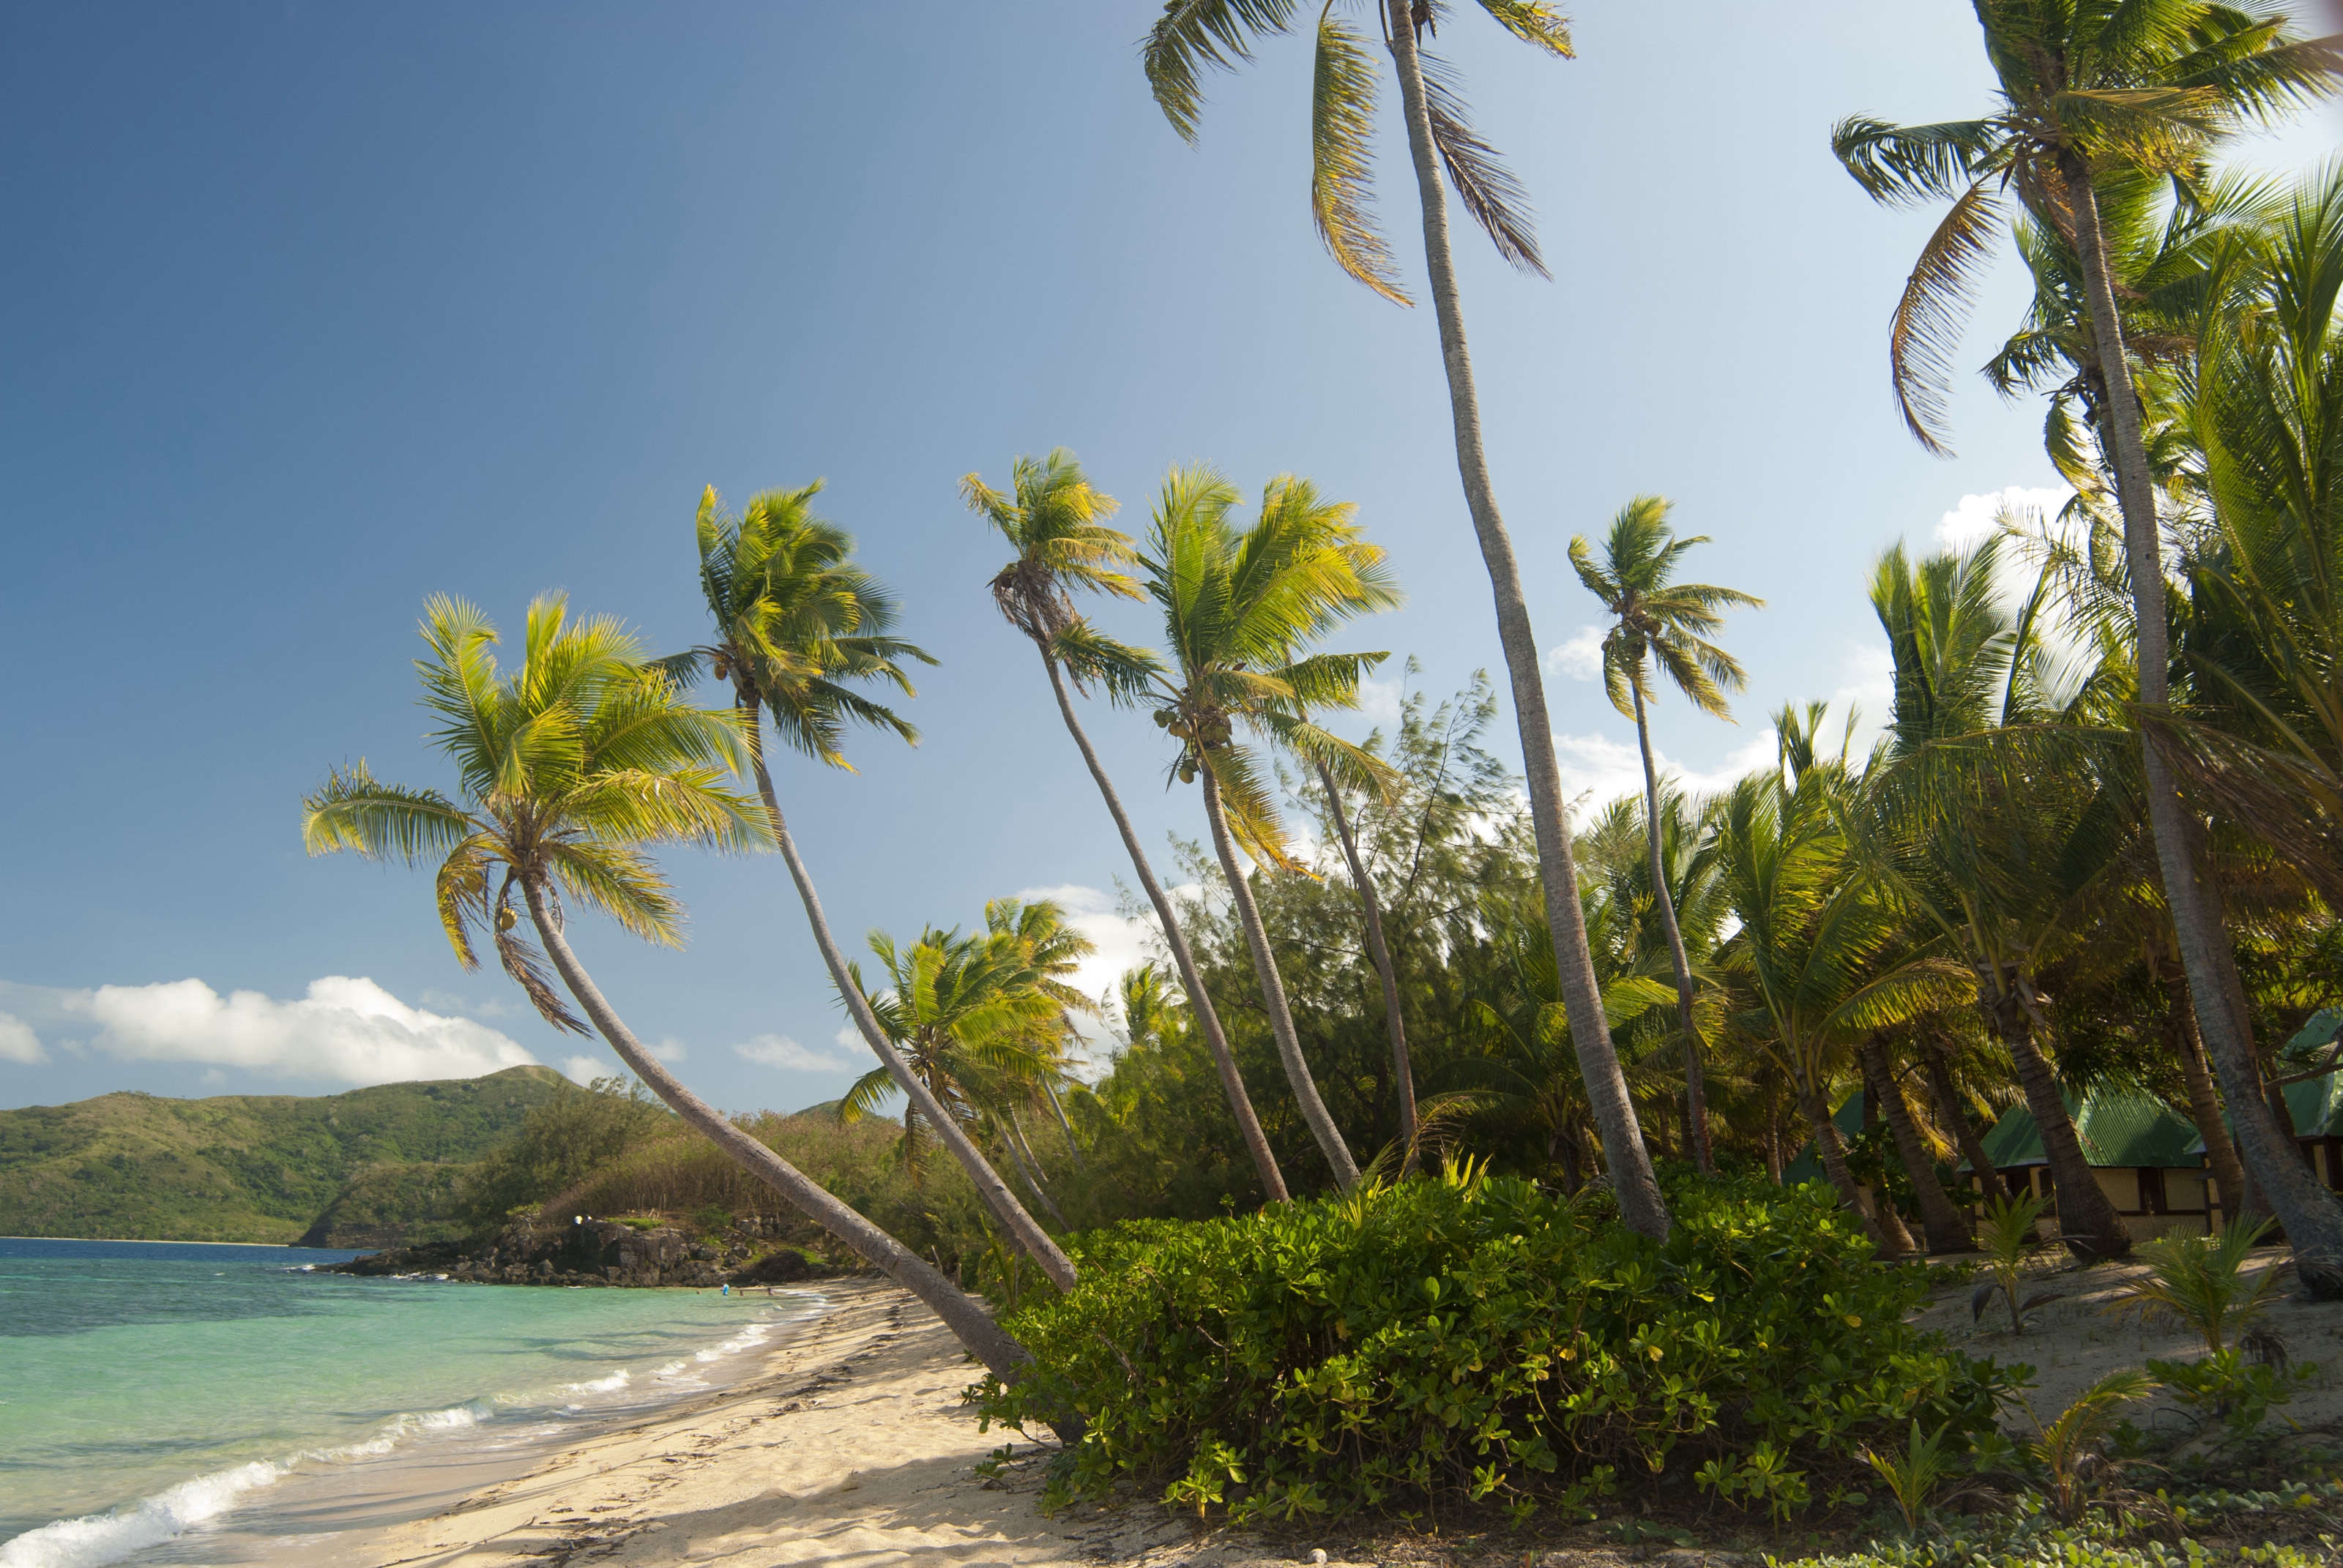 Descarga gratis la imagen Naturaleza, Maldivas, Palms, Zona Tropical, Trópico, Playa en el escritorio de tu PC